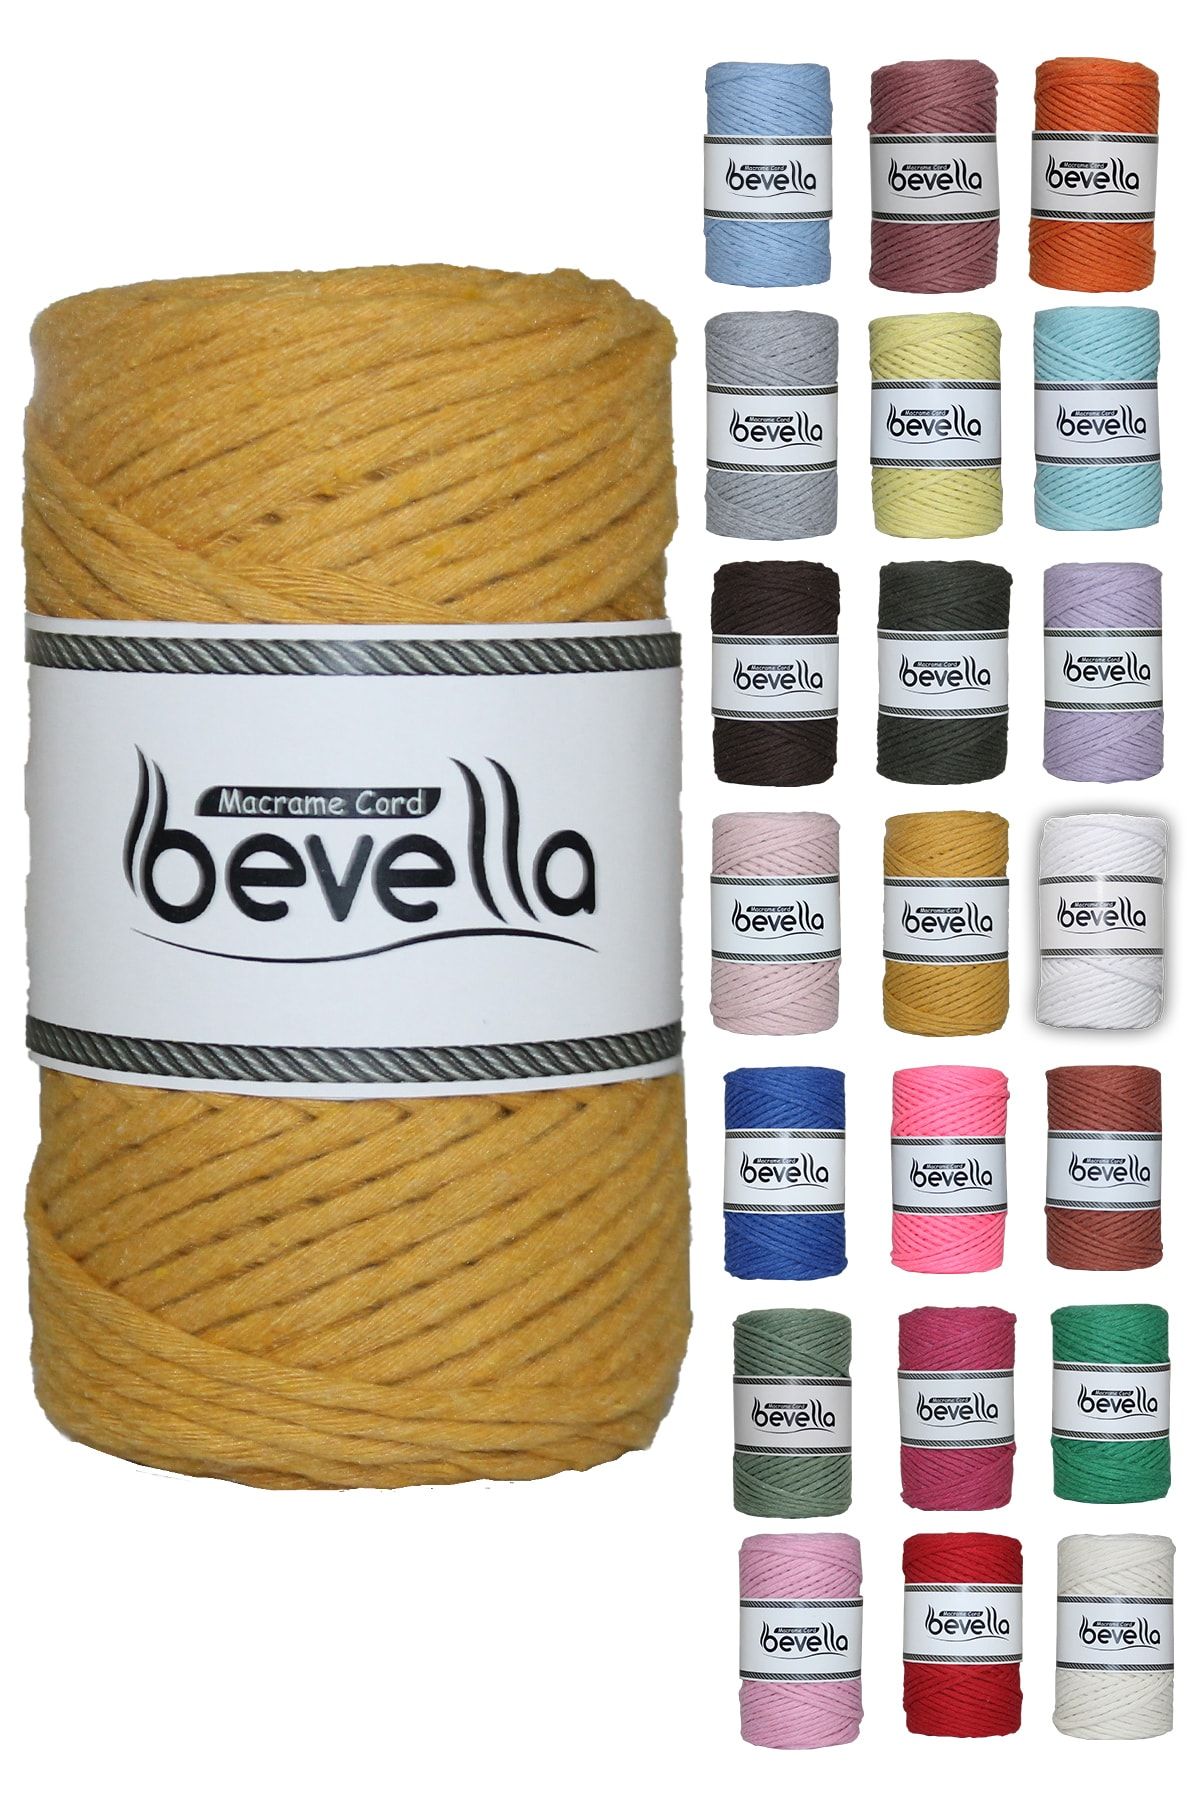 Bevella Macrame Cord Knitting Rope - Yellow - Polyamide